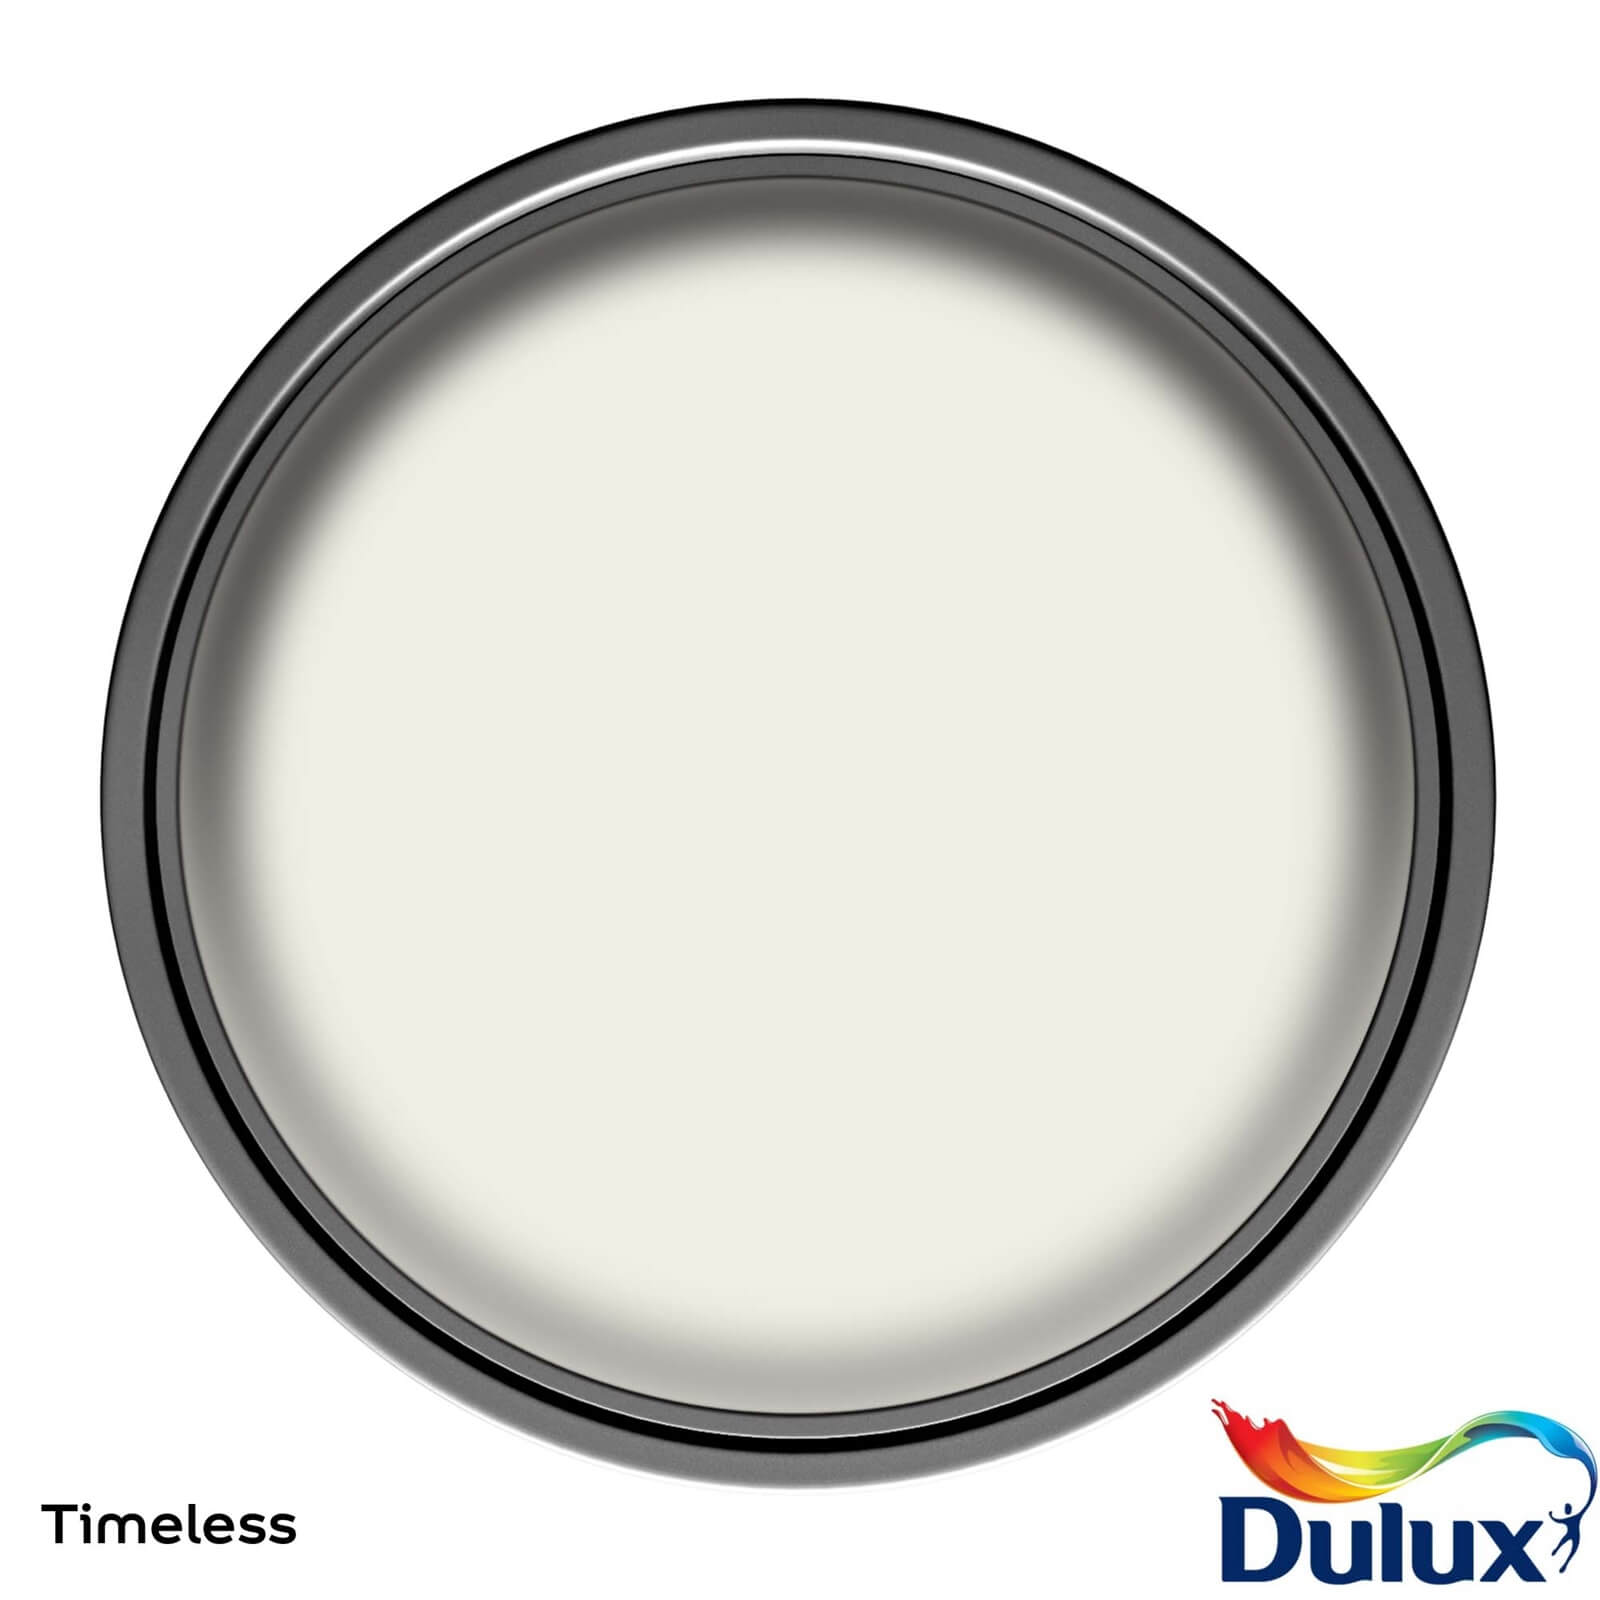 Dulux Quick Dry Gloss Timeless - 750ml